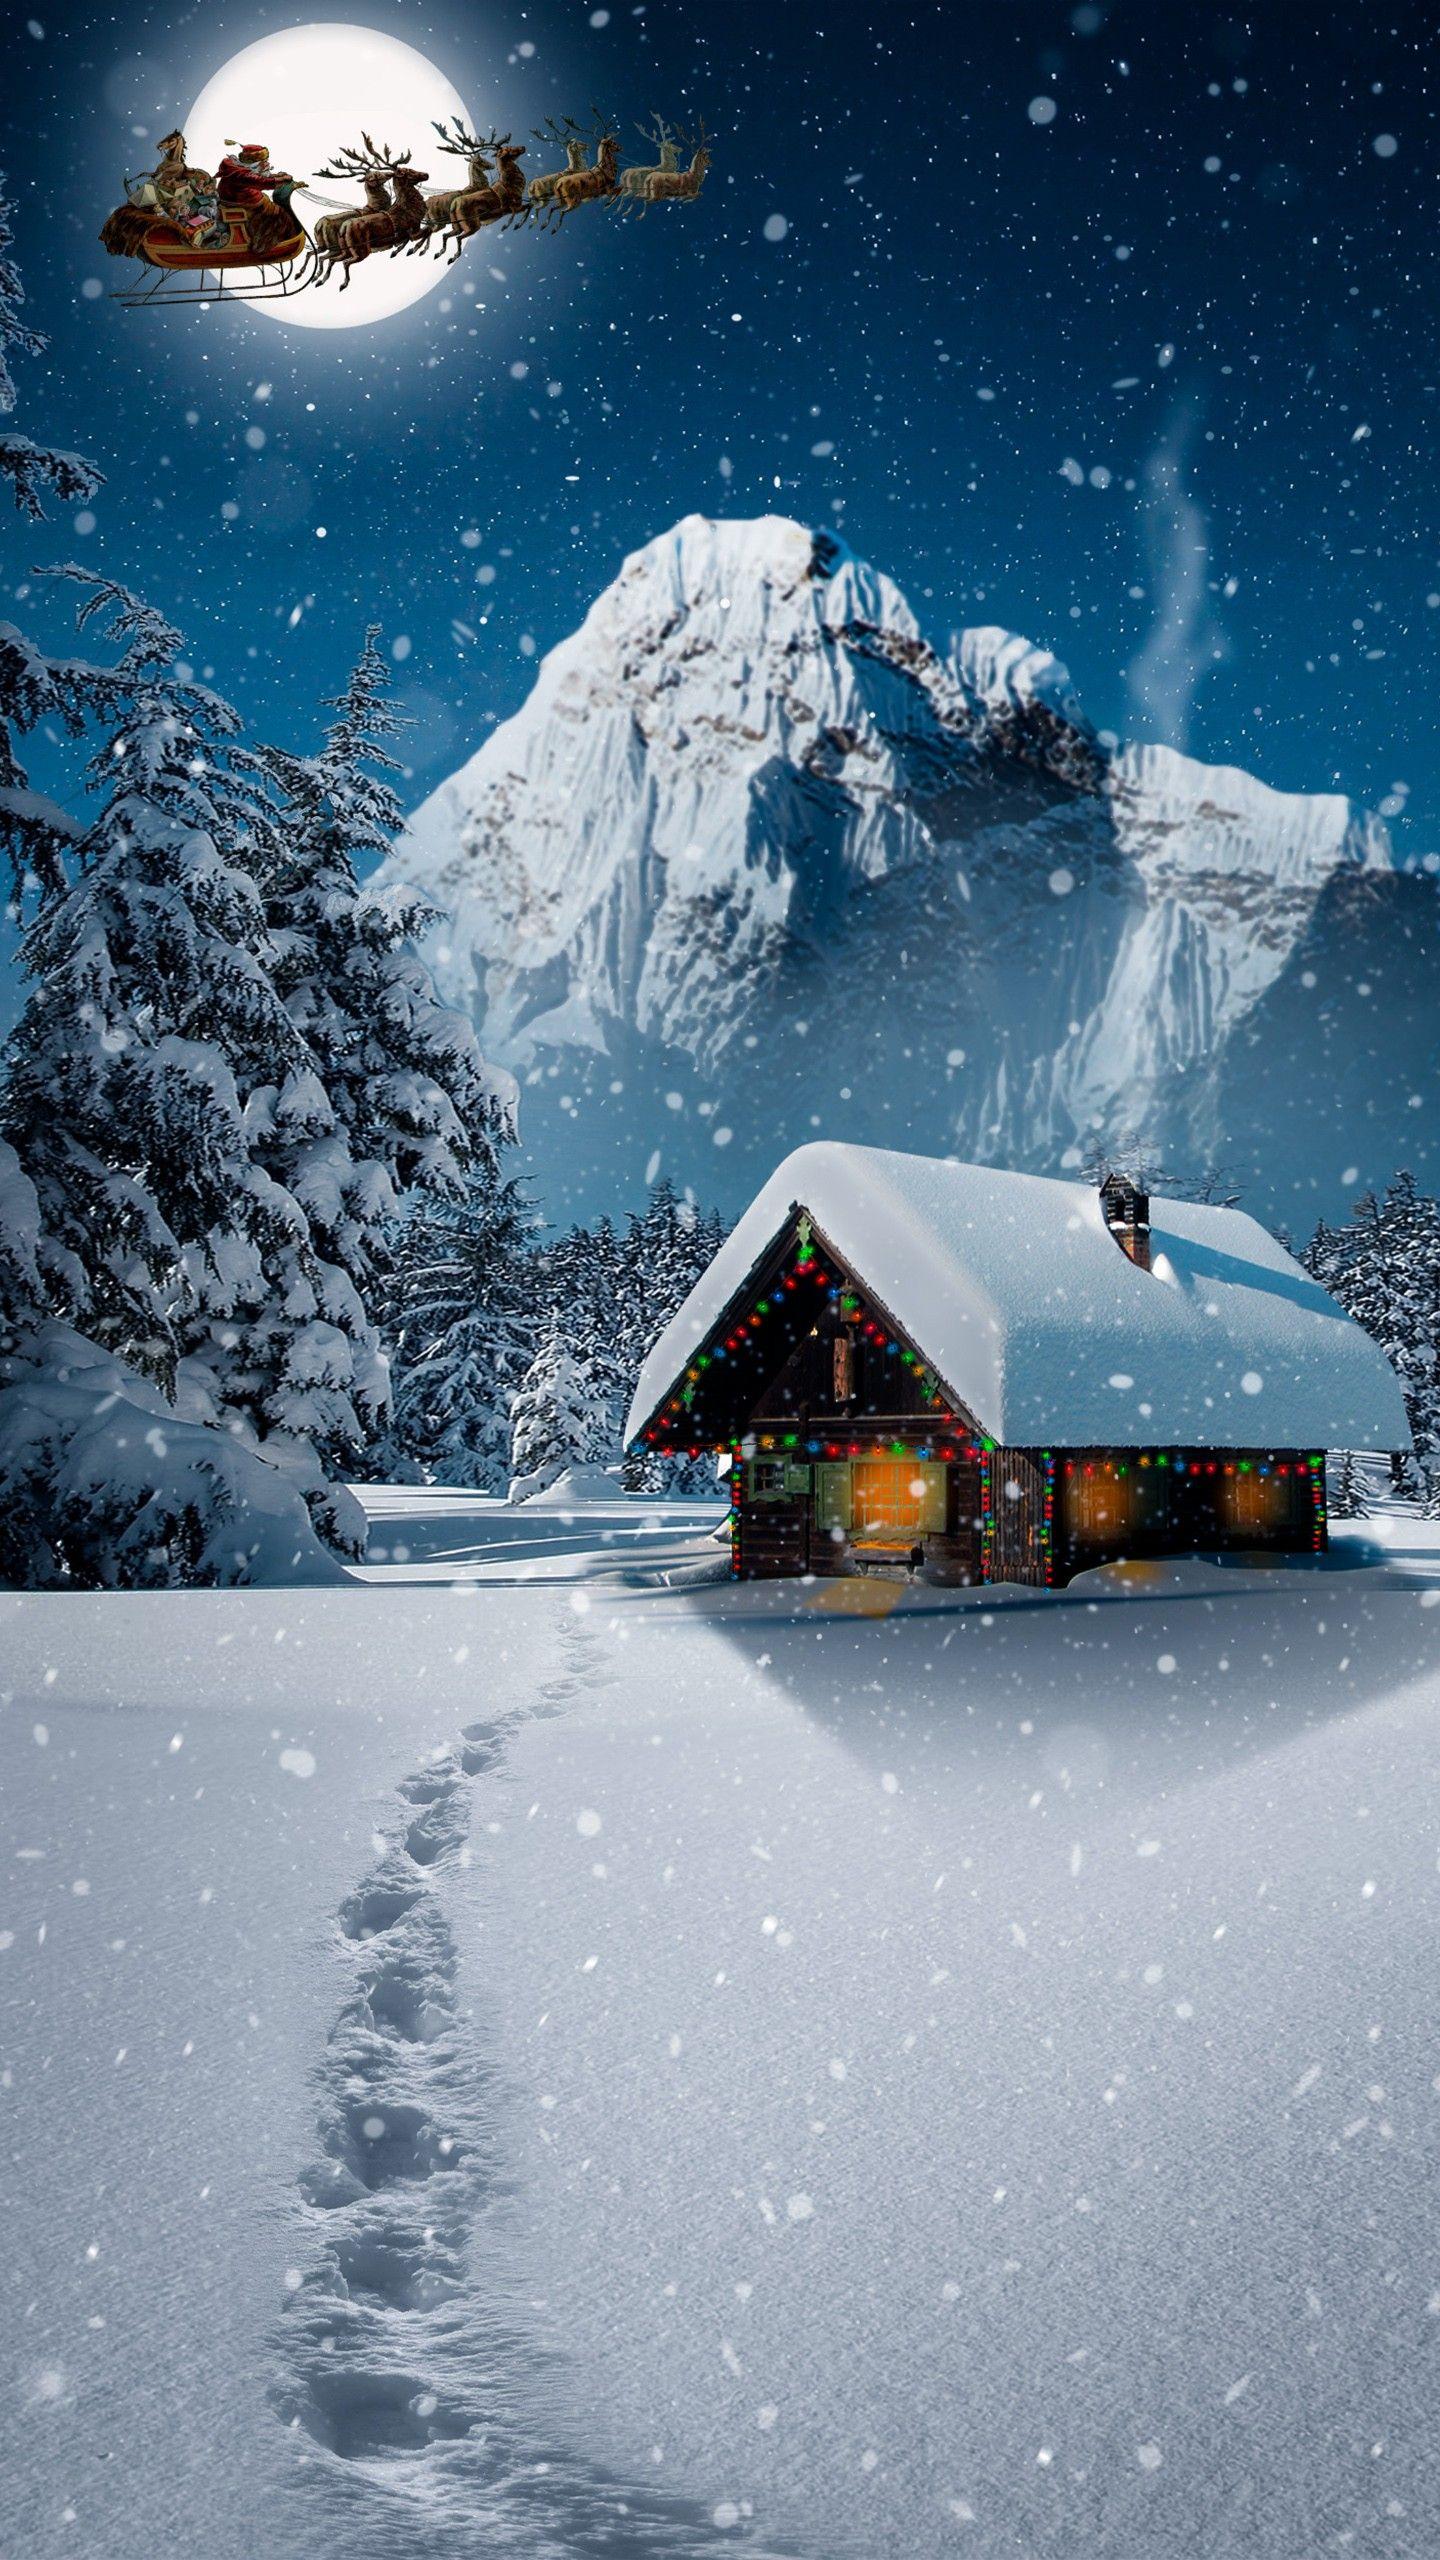 Christmas Scenery HD Wallpapers - Top Free Christmas Scenery HD